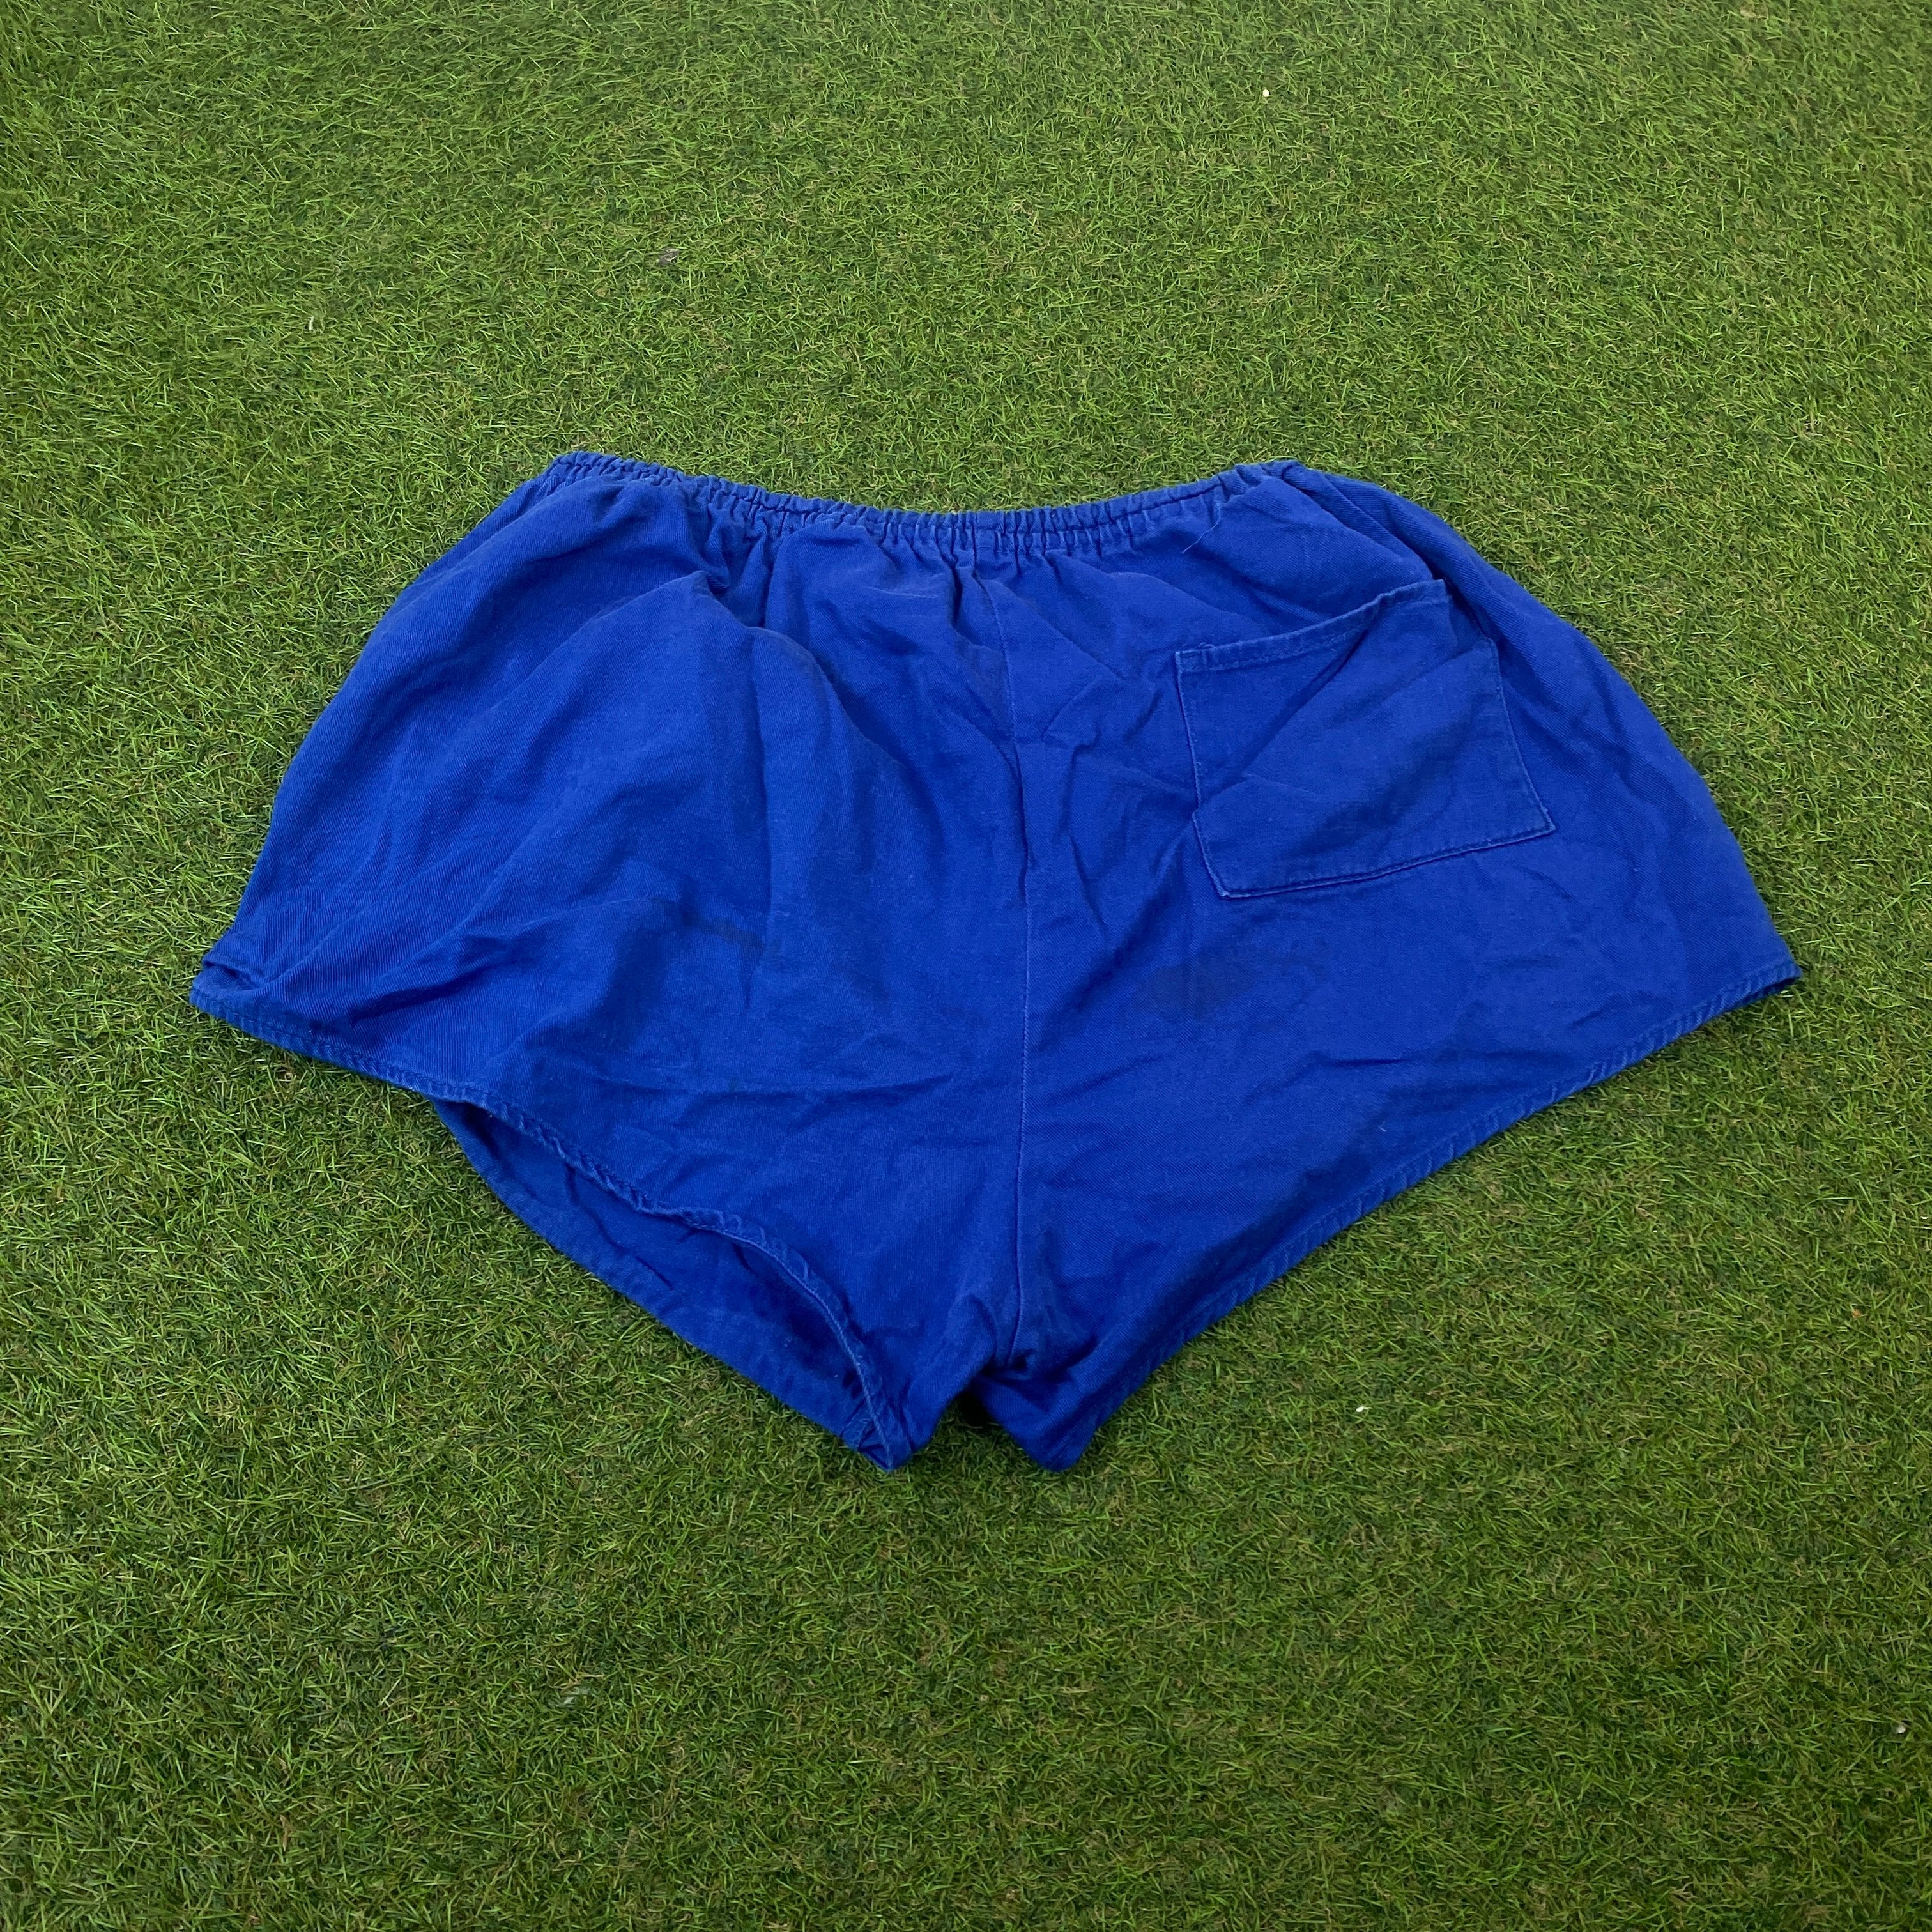 Retro Sprinter Shorts Blue Medium